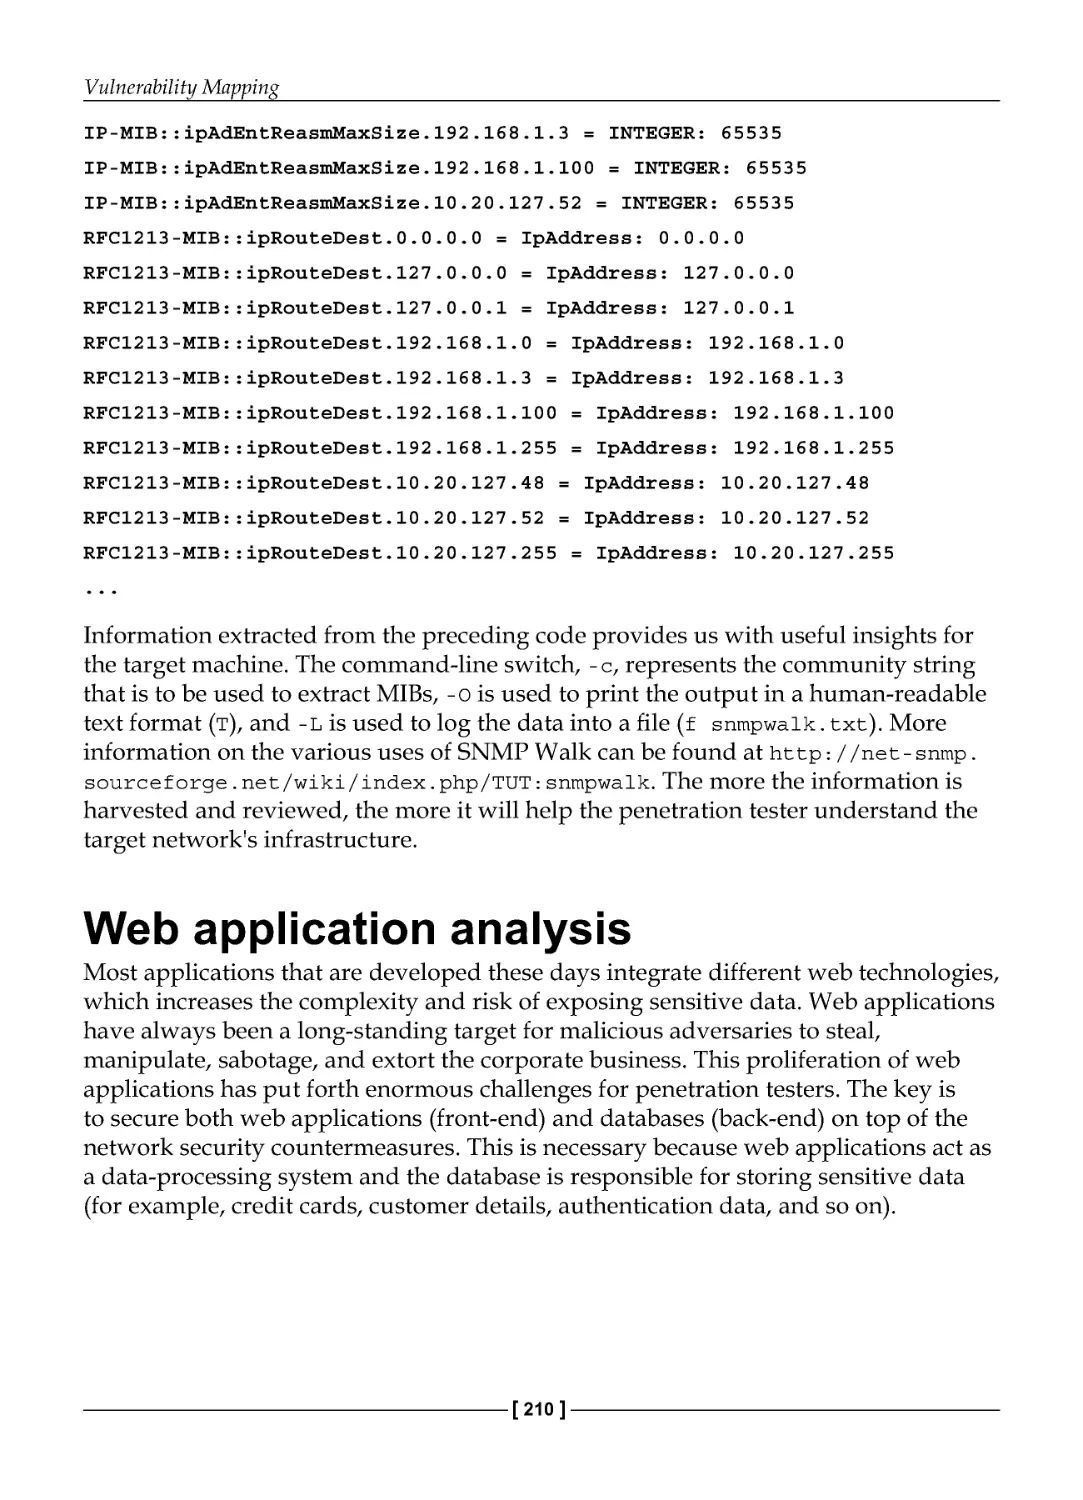 Web application analysis